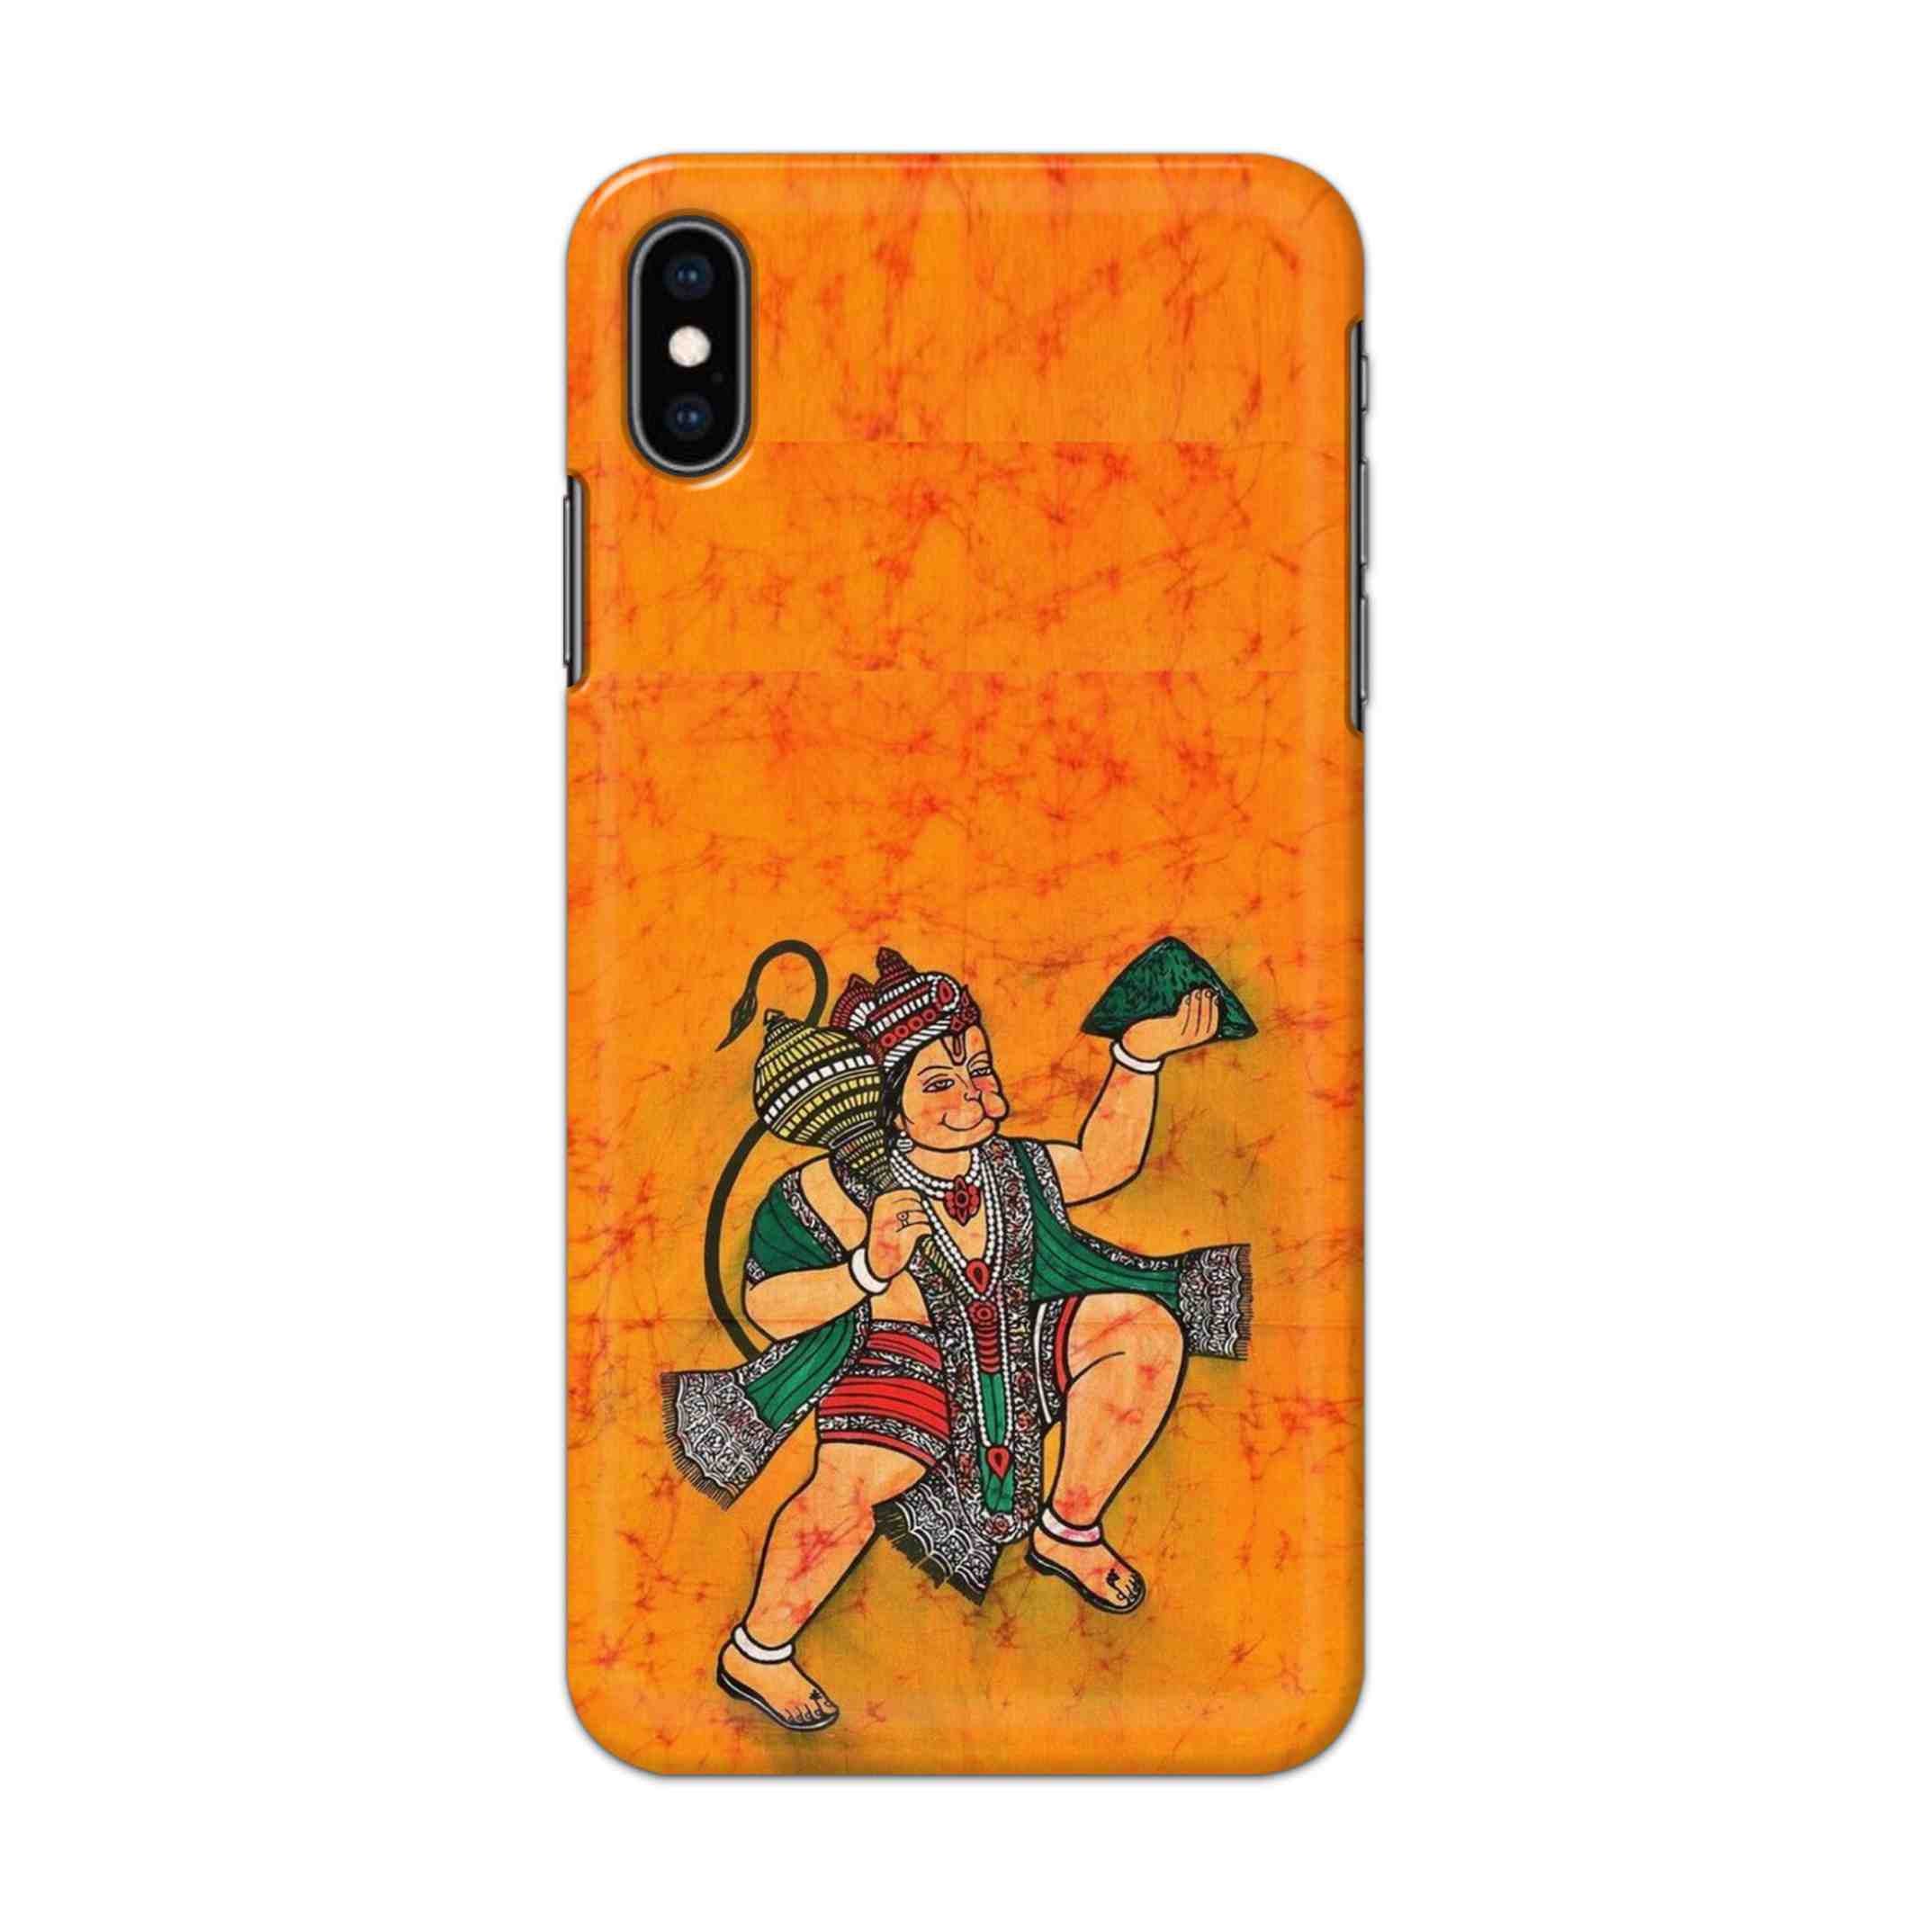 Buy Hanuman Ji Hard Back Mobile Phone Case/Cover For iPhone XS MAX Online